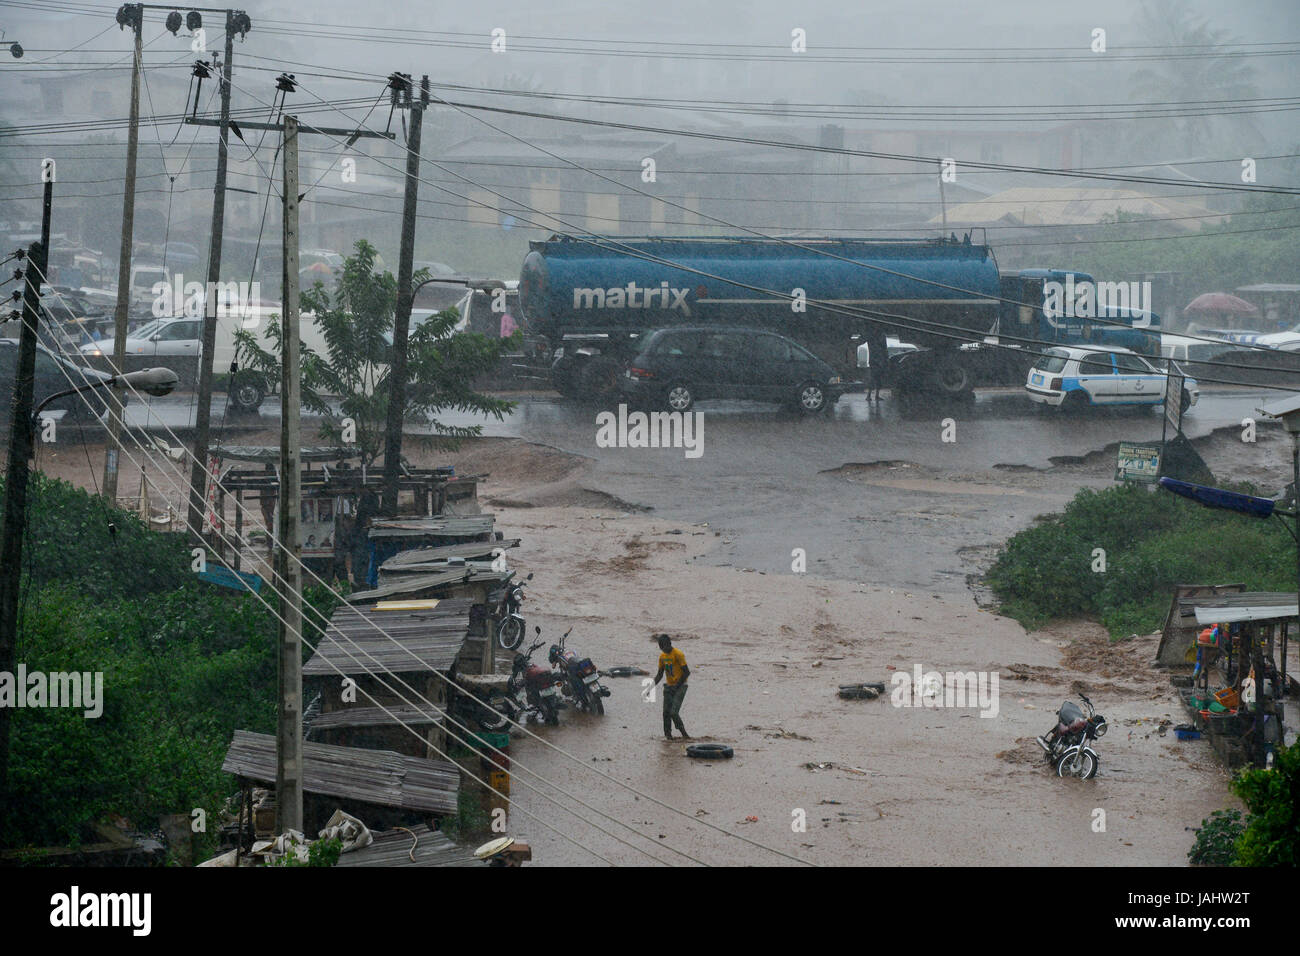 NIGERIA, Oyo State, Ibadan, highway Lagos - Ibadan during raining season / Autobahn Ibadan -Lagos in der Regenzeit Stock Photo